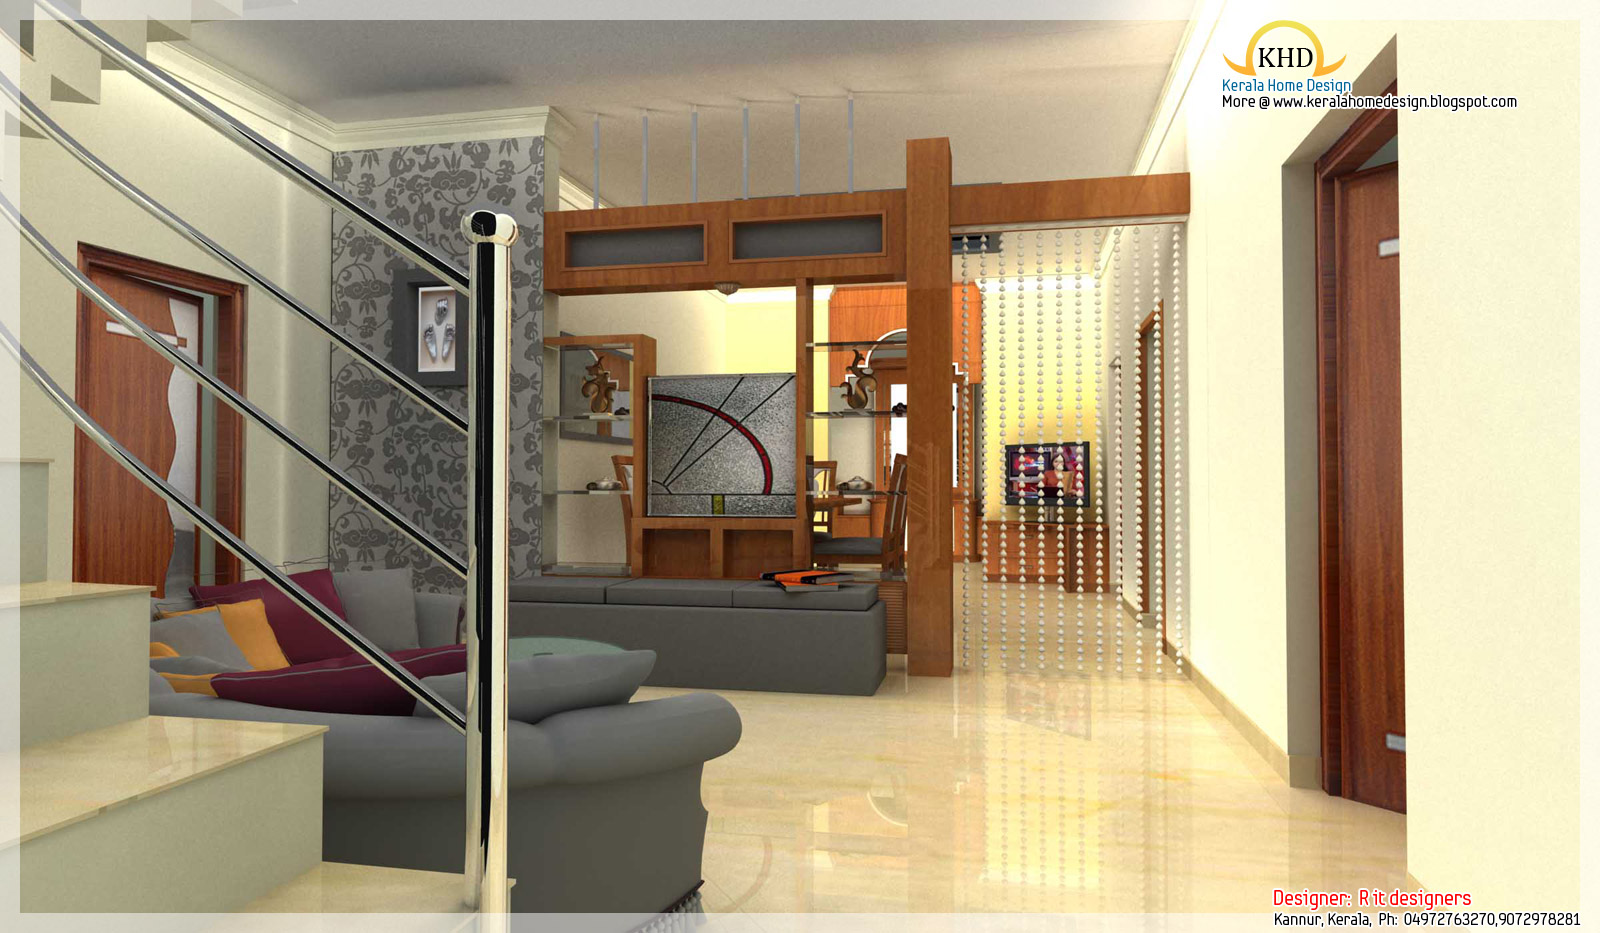 Kerala Veedu Interior Design Joy Studio Design Gallery 